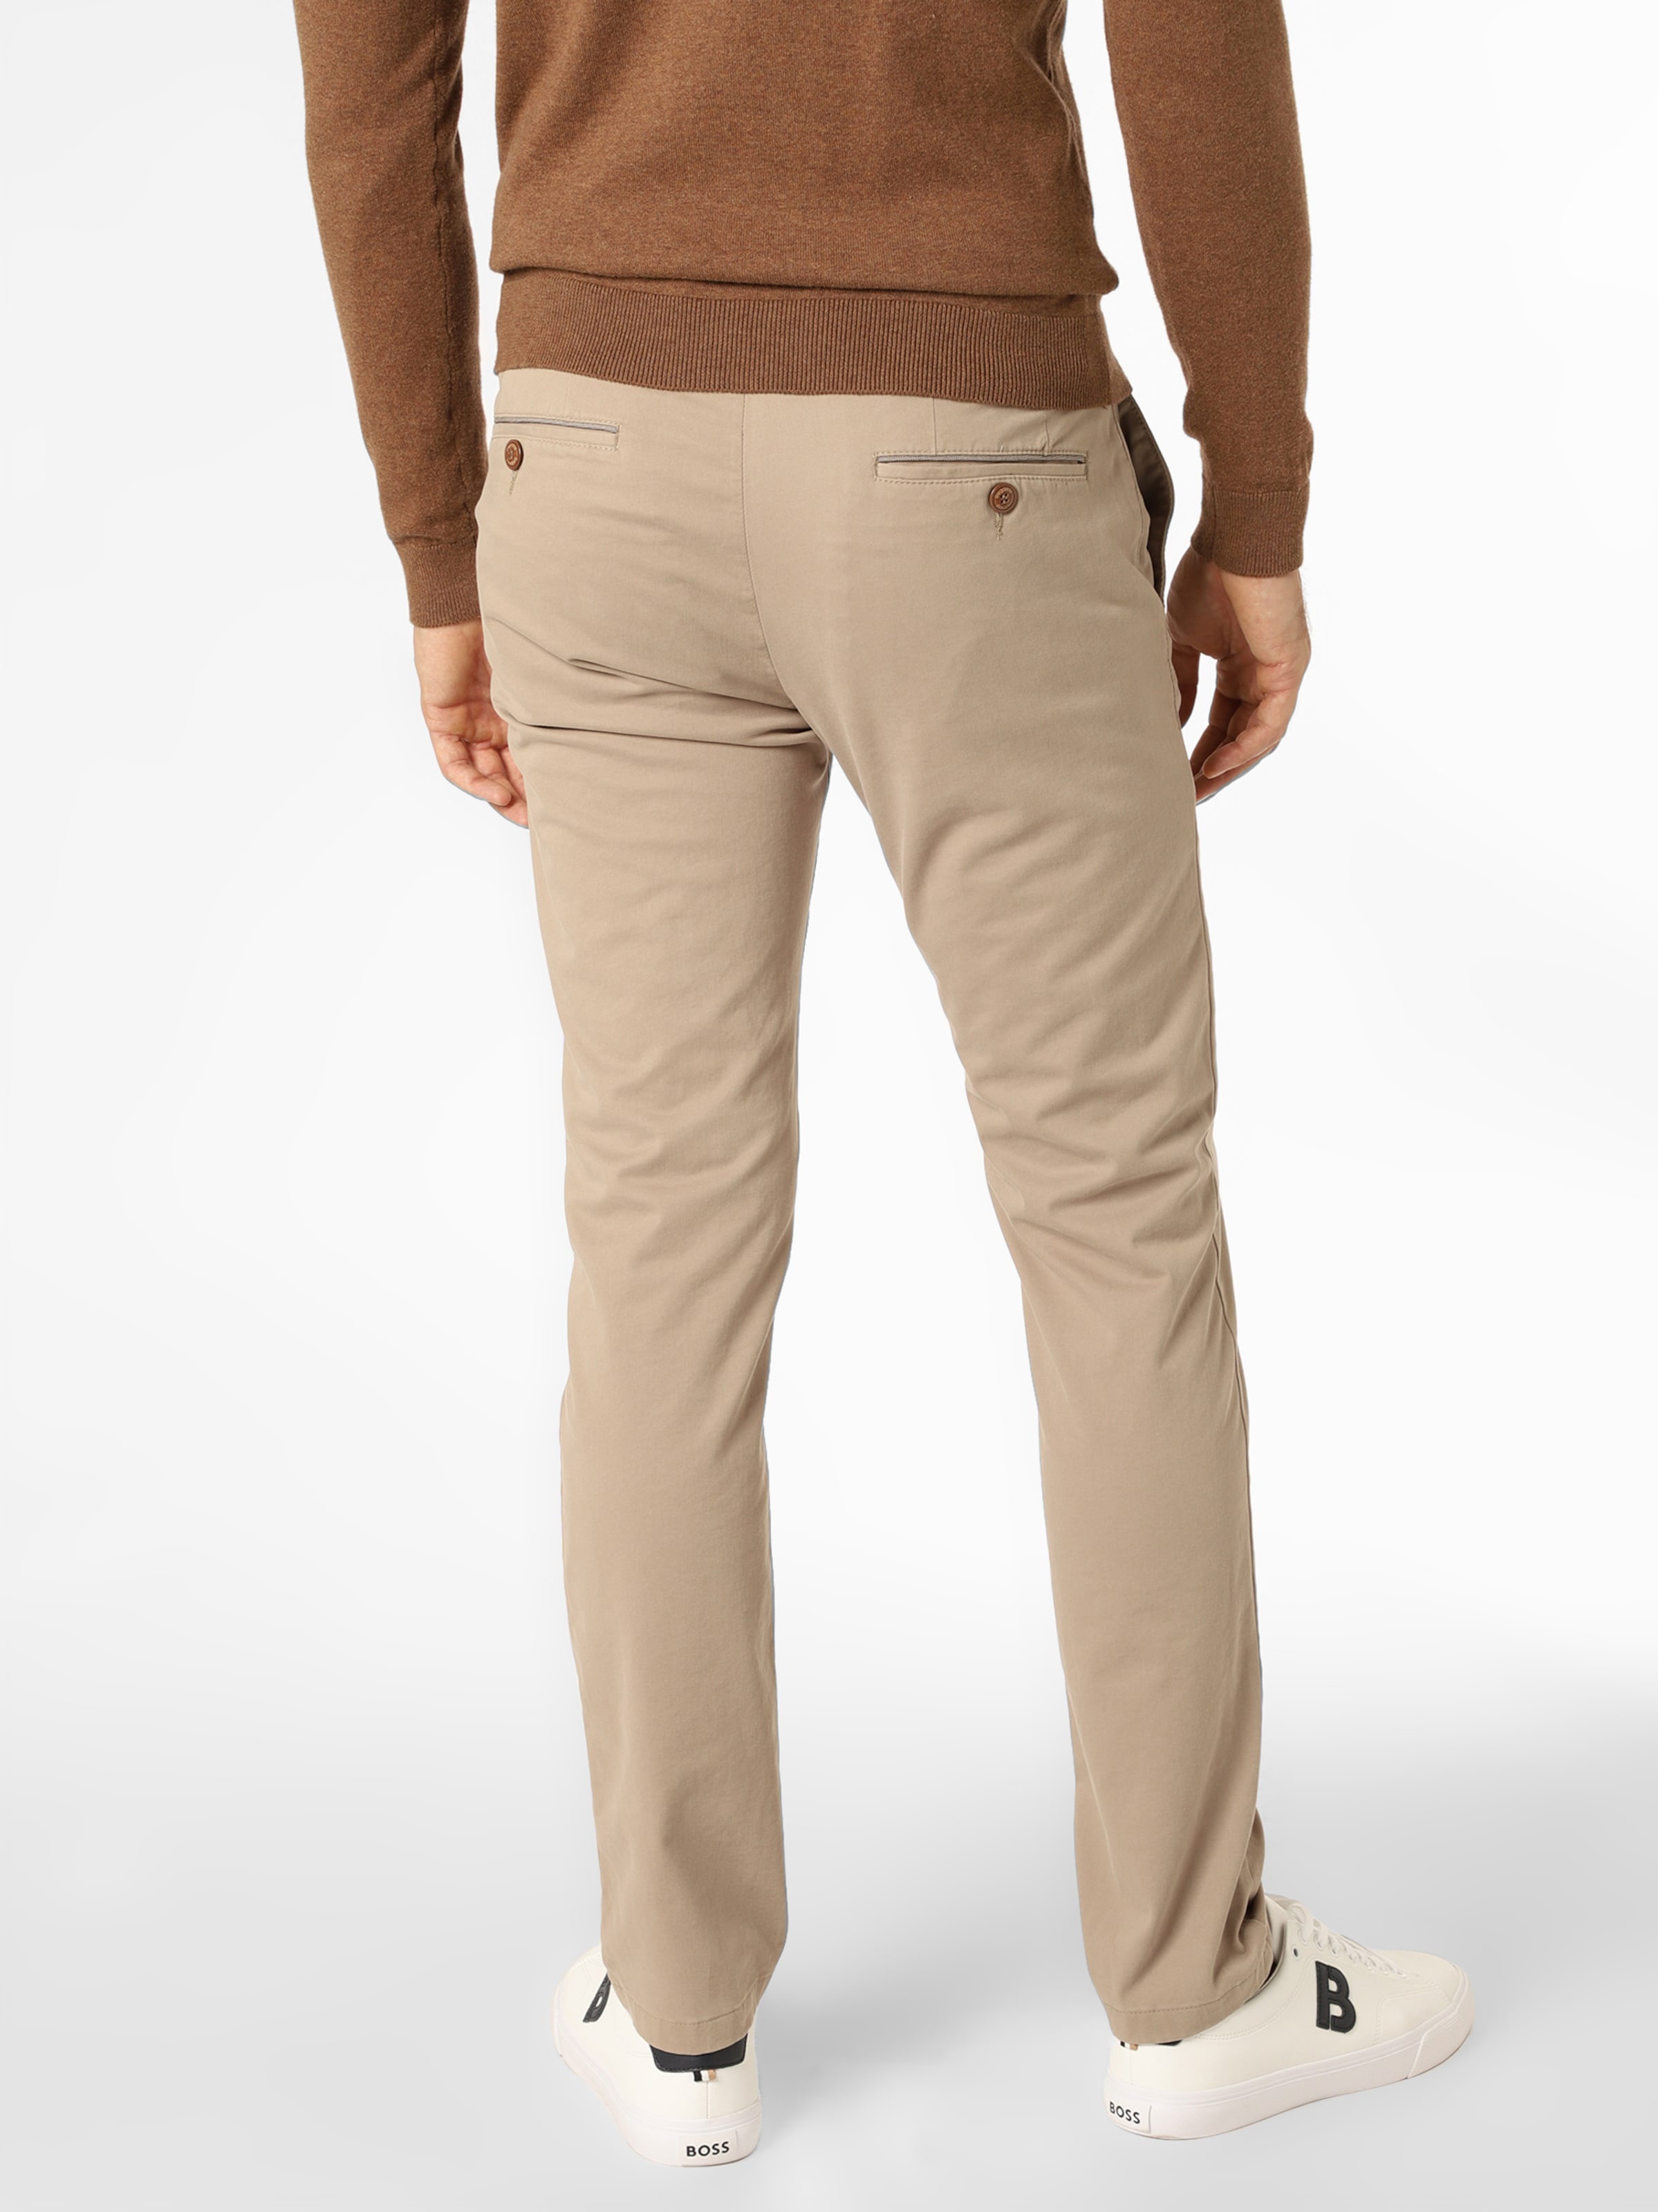 Bugatti Men's Pants Trousers Texas Olive Pocket Button Zip REGULAR FIT  Genuine | eBay